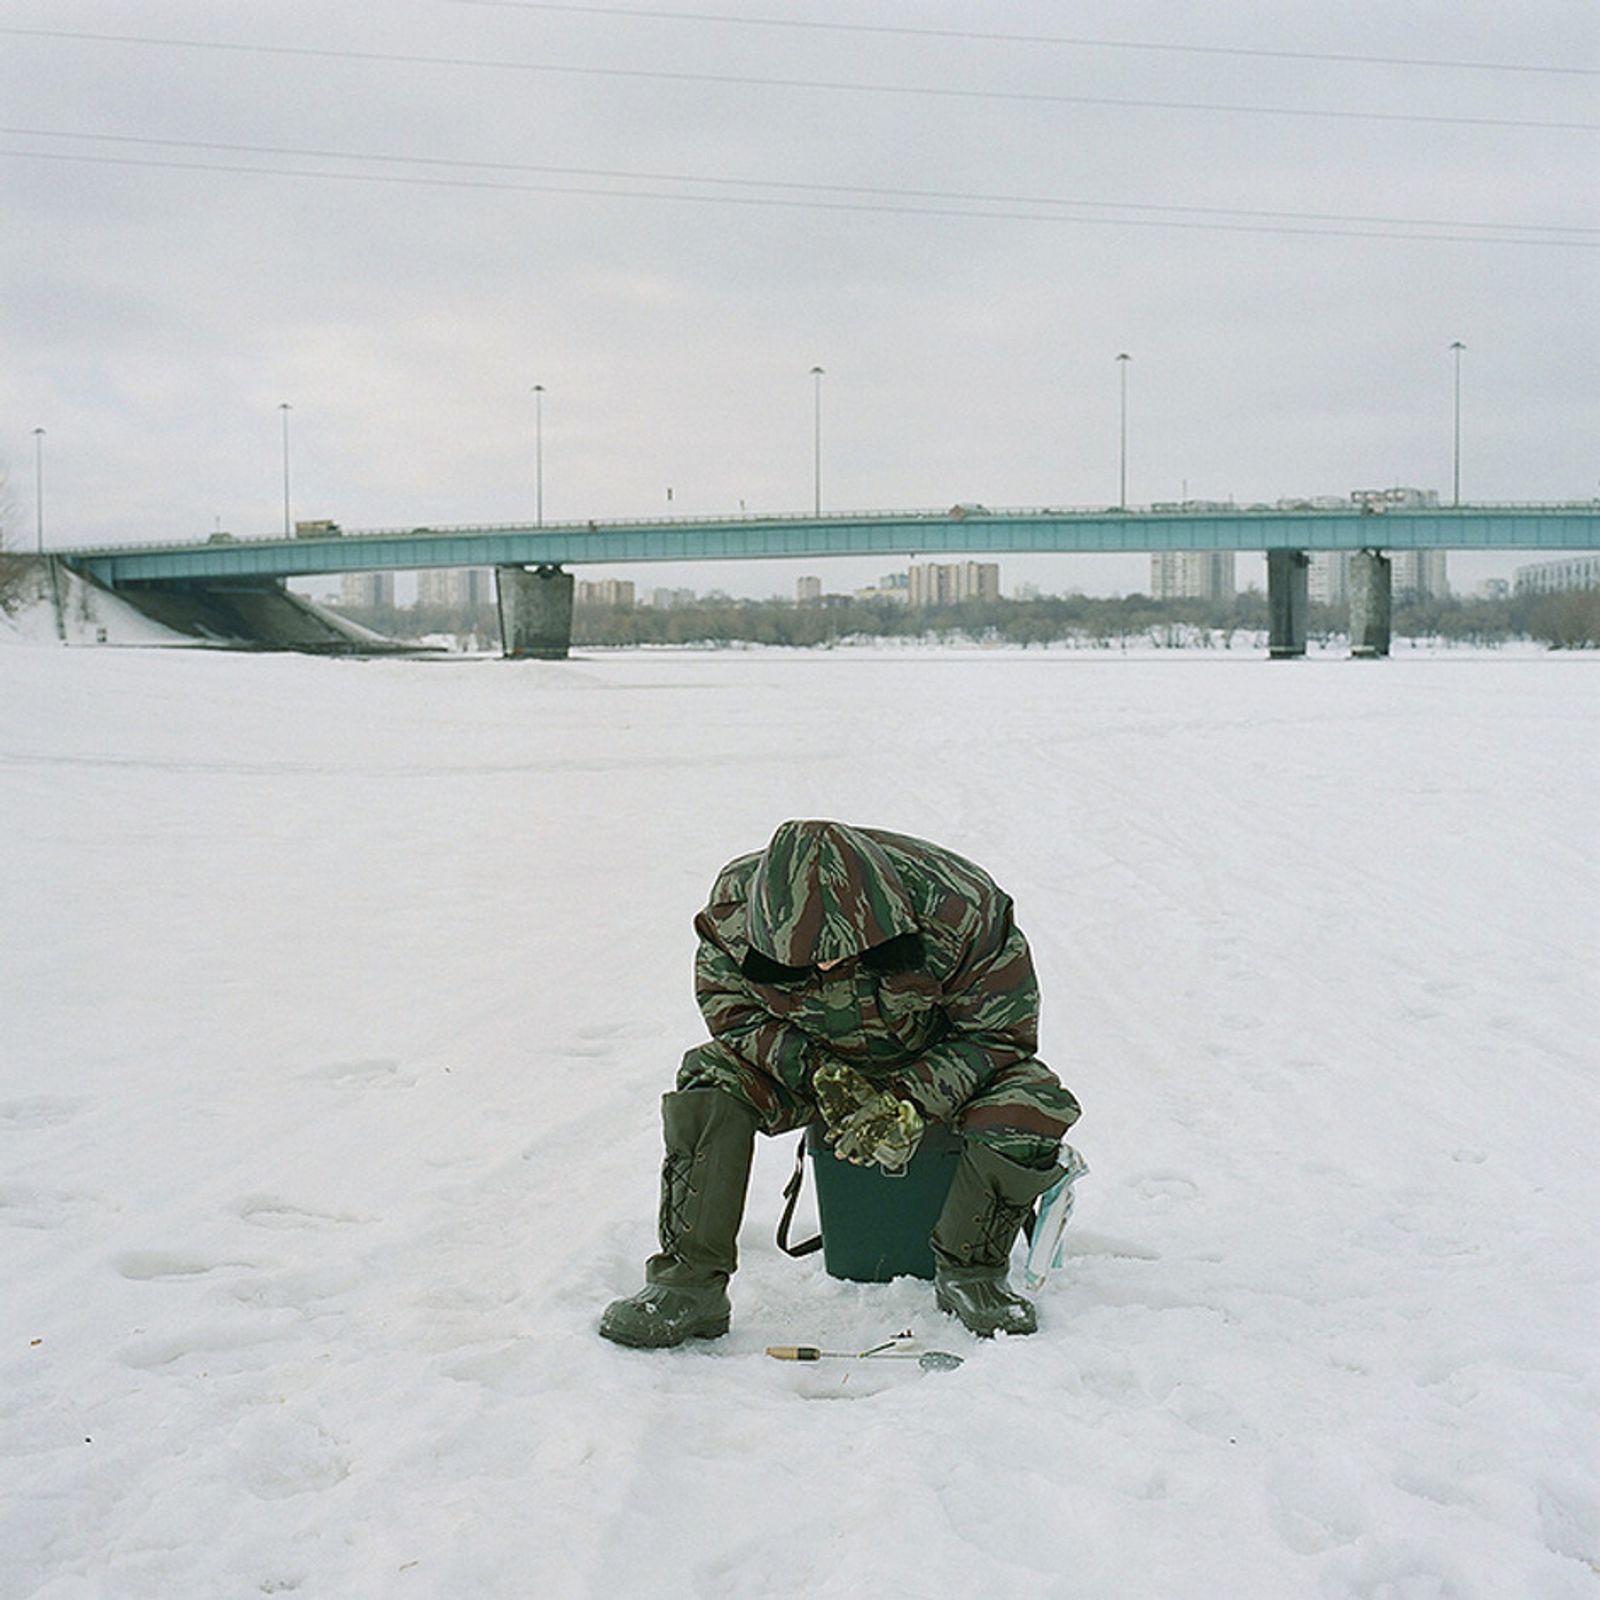 © Sofya Tatarinova - Image from the Fishing in Russia photography project